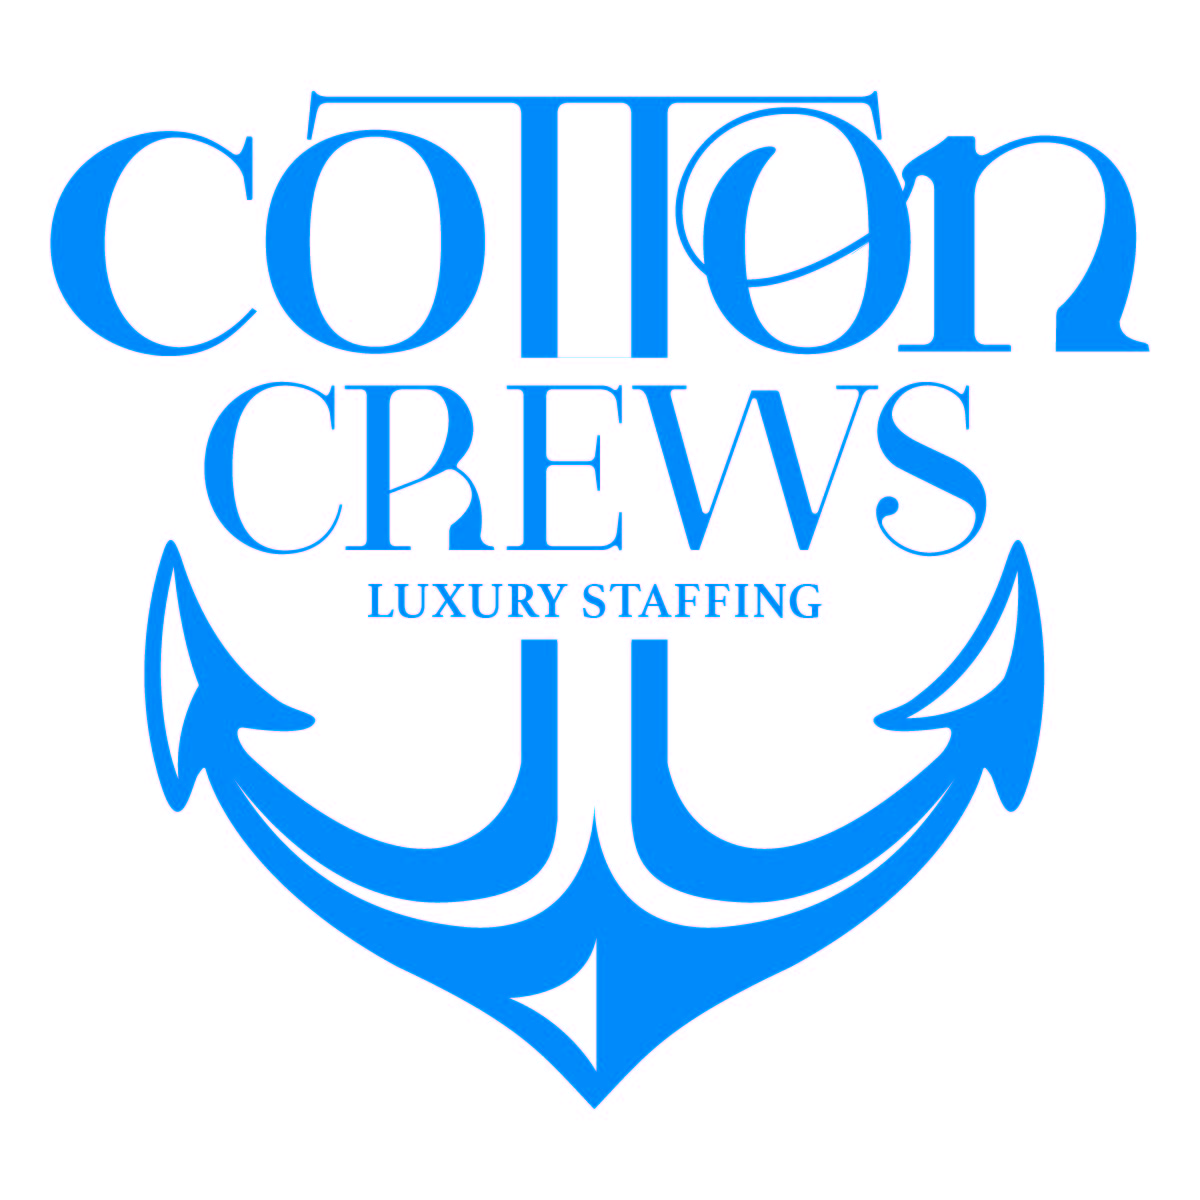 Cotton Crews Luxury Staffing Palm Beach Florida